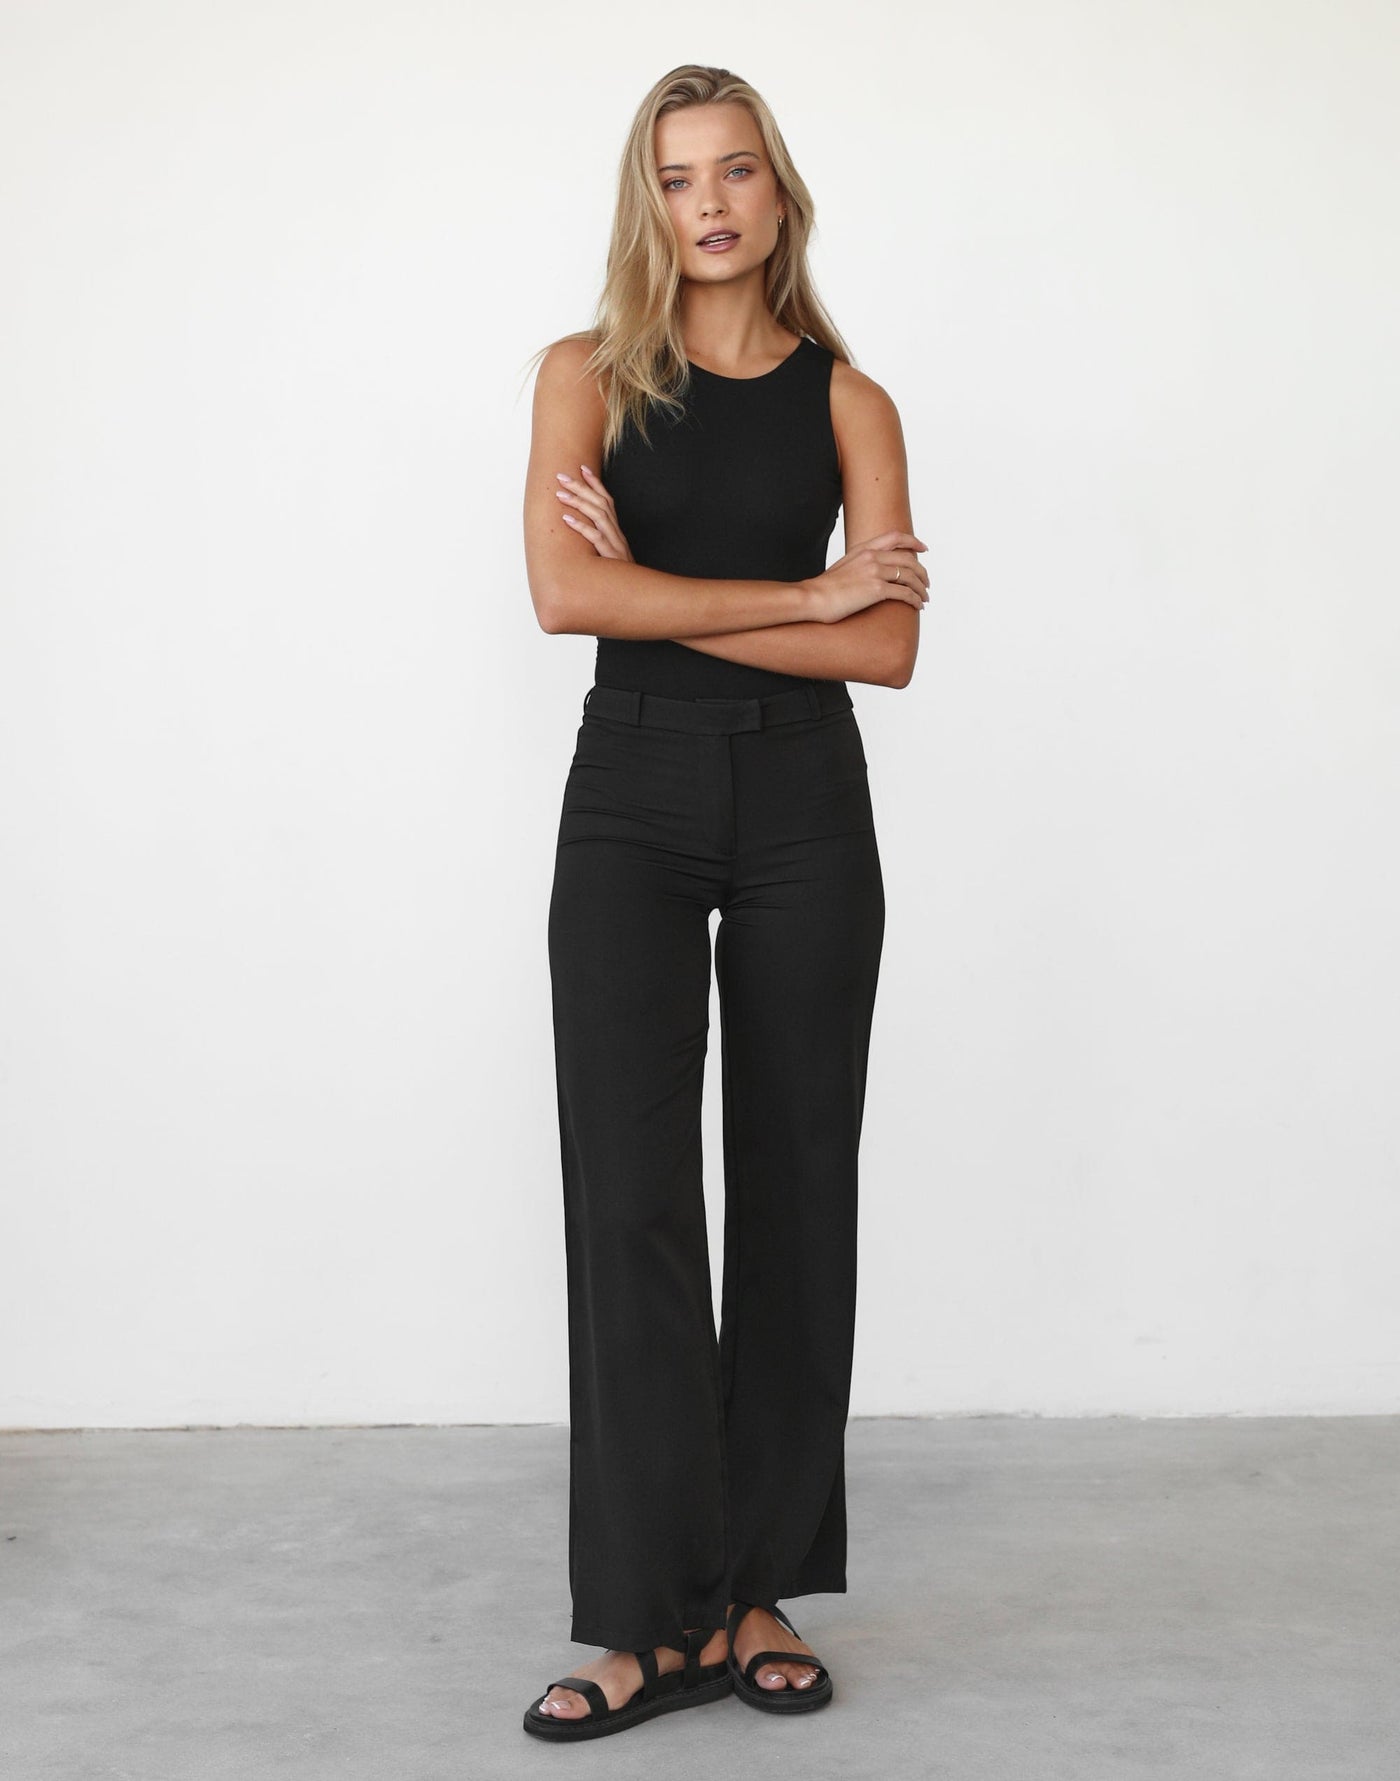 Forget It Bodysuit (Black) - Open Back Sleeveless Bodysuit - Women's Top - Charcoal Clothing